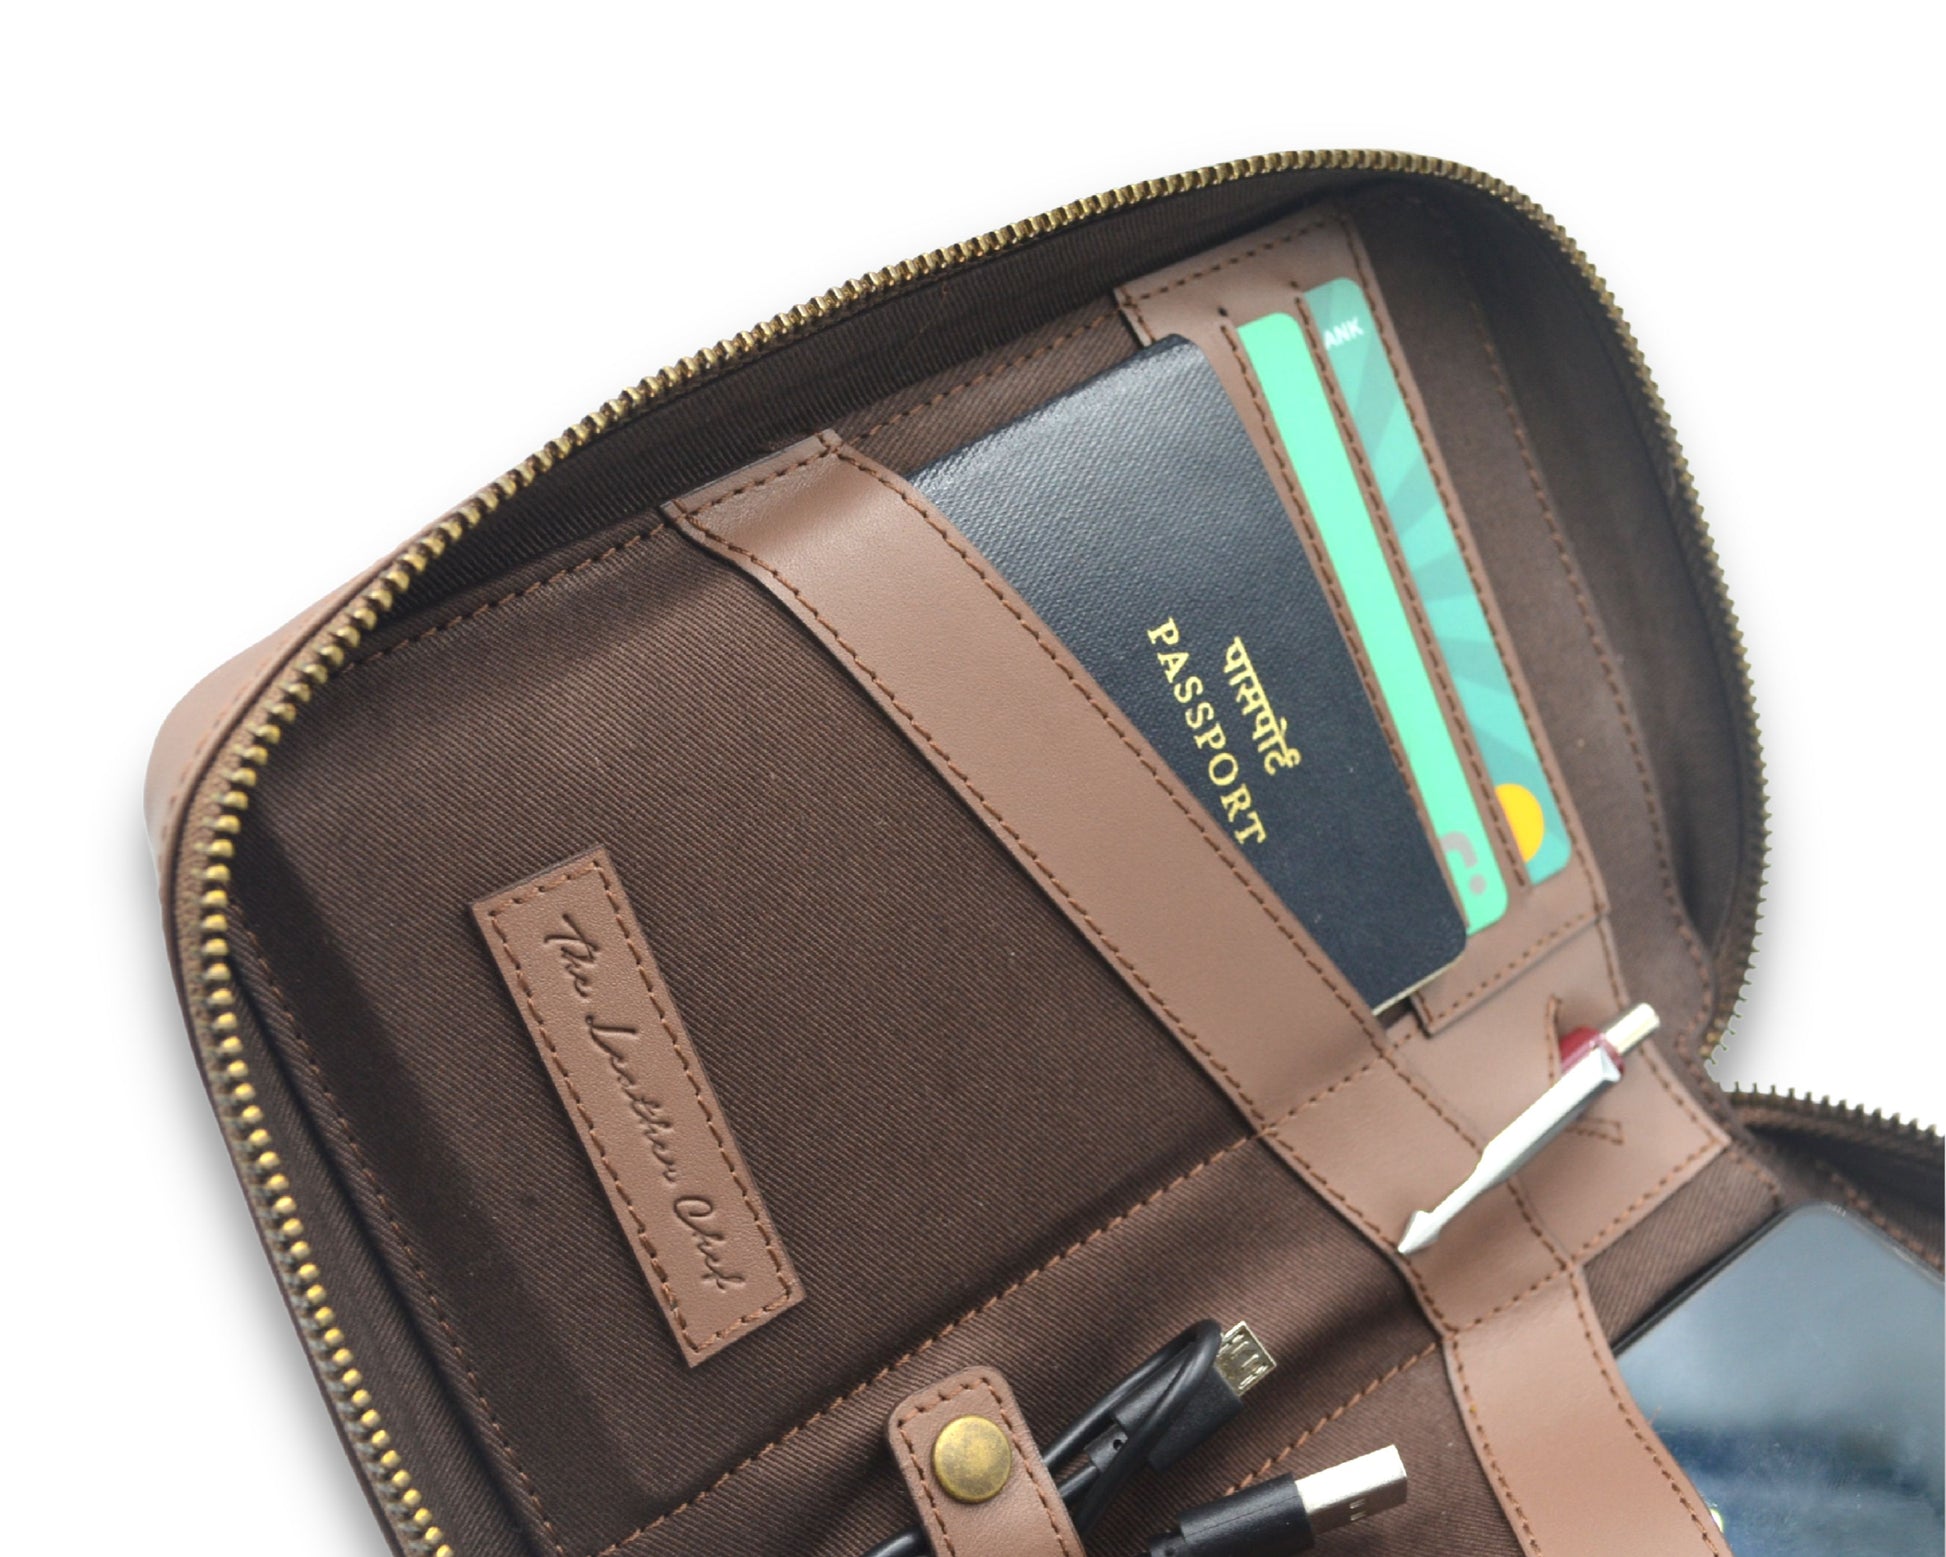 Nomad Passport Organiser - Tan (Full Leather)